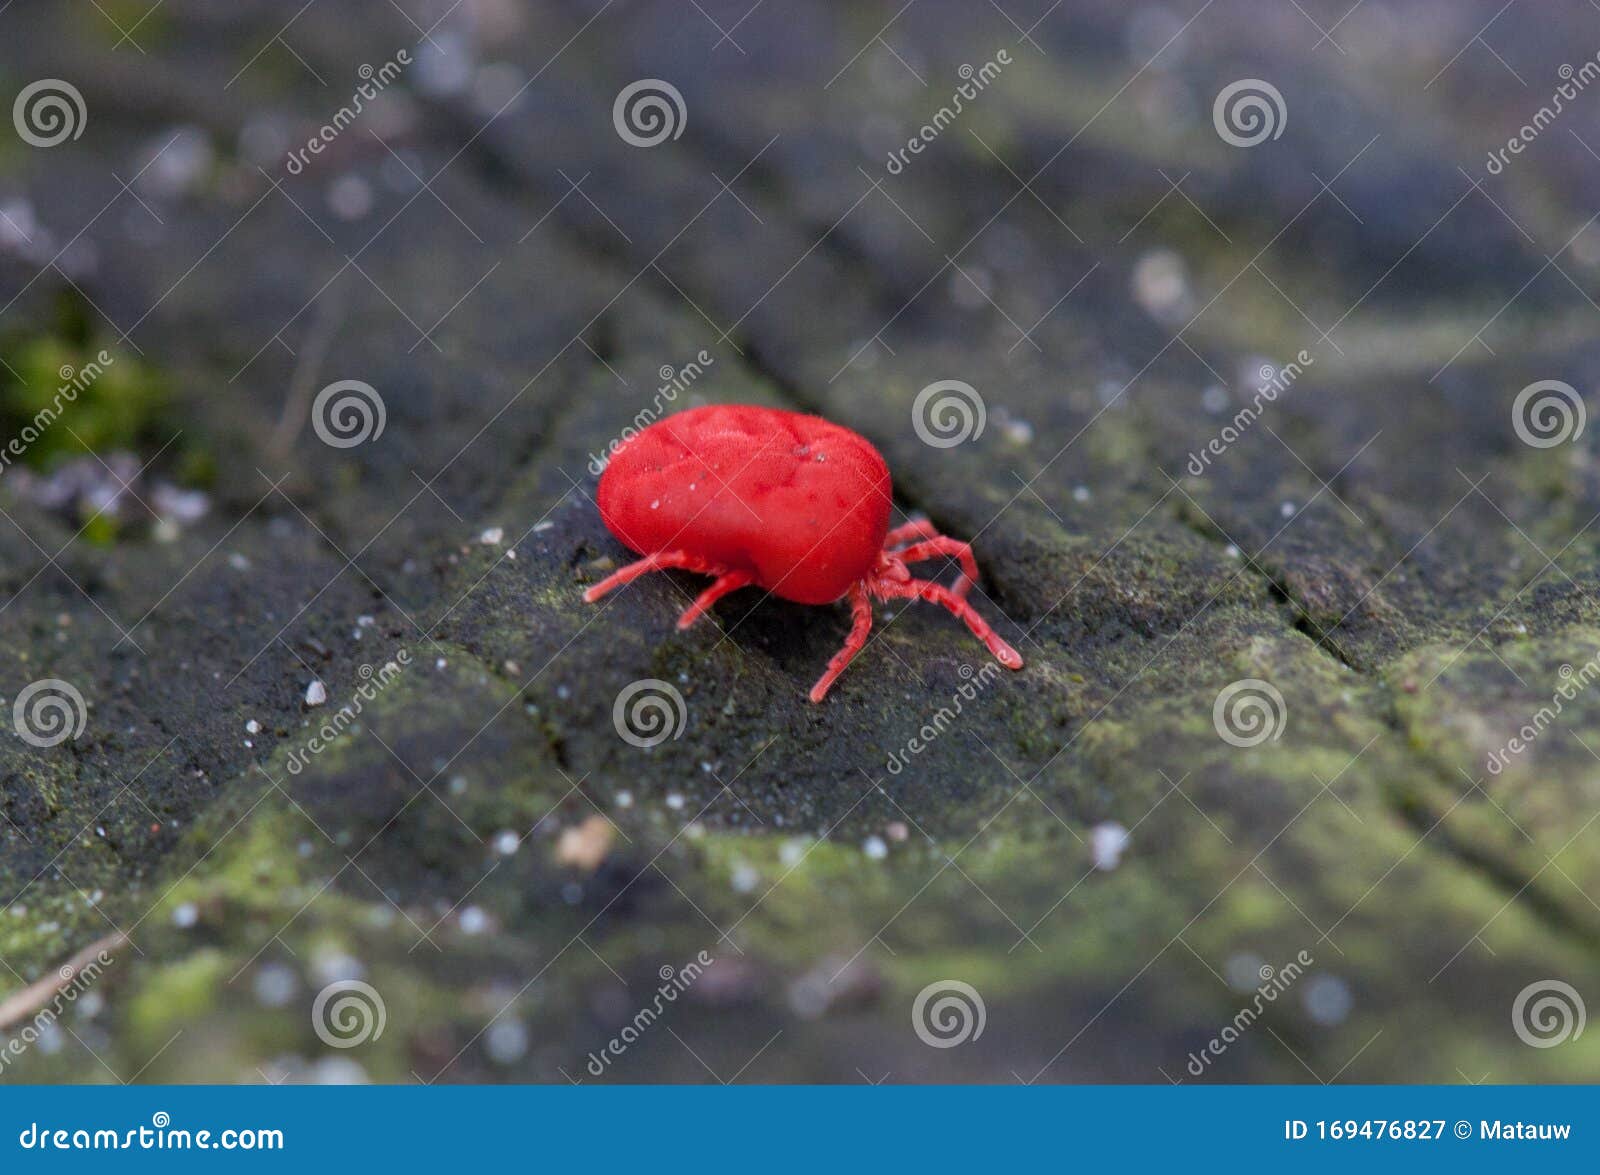 small brightly coloured red mite